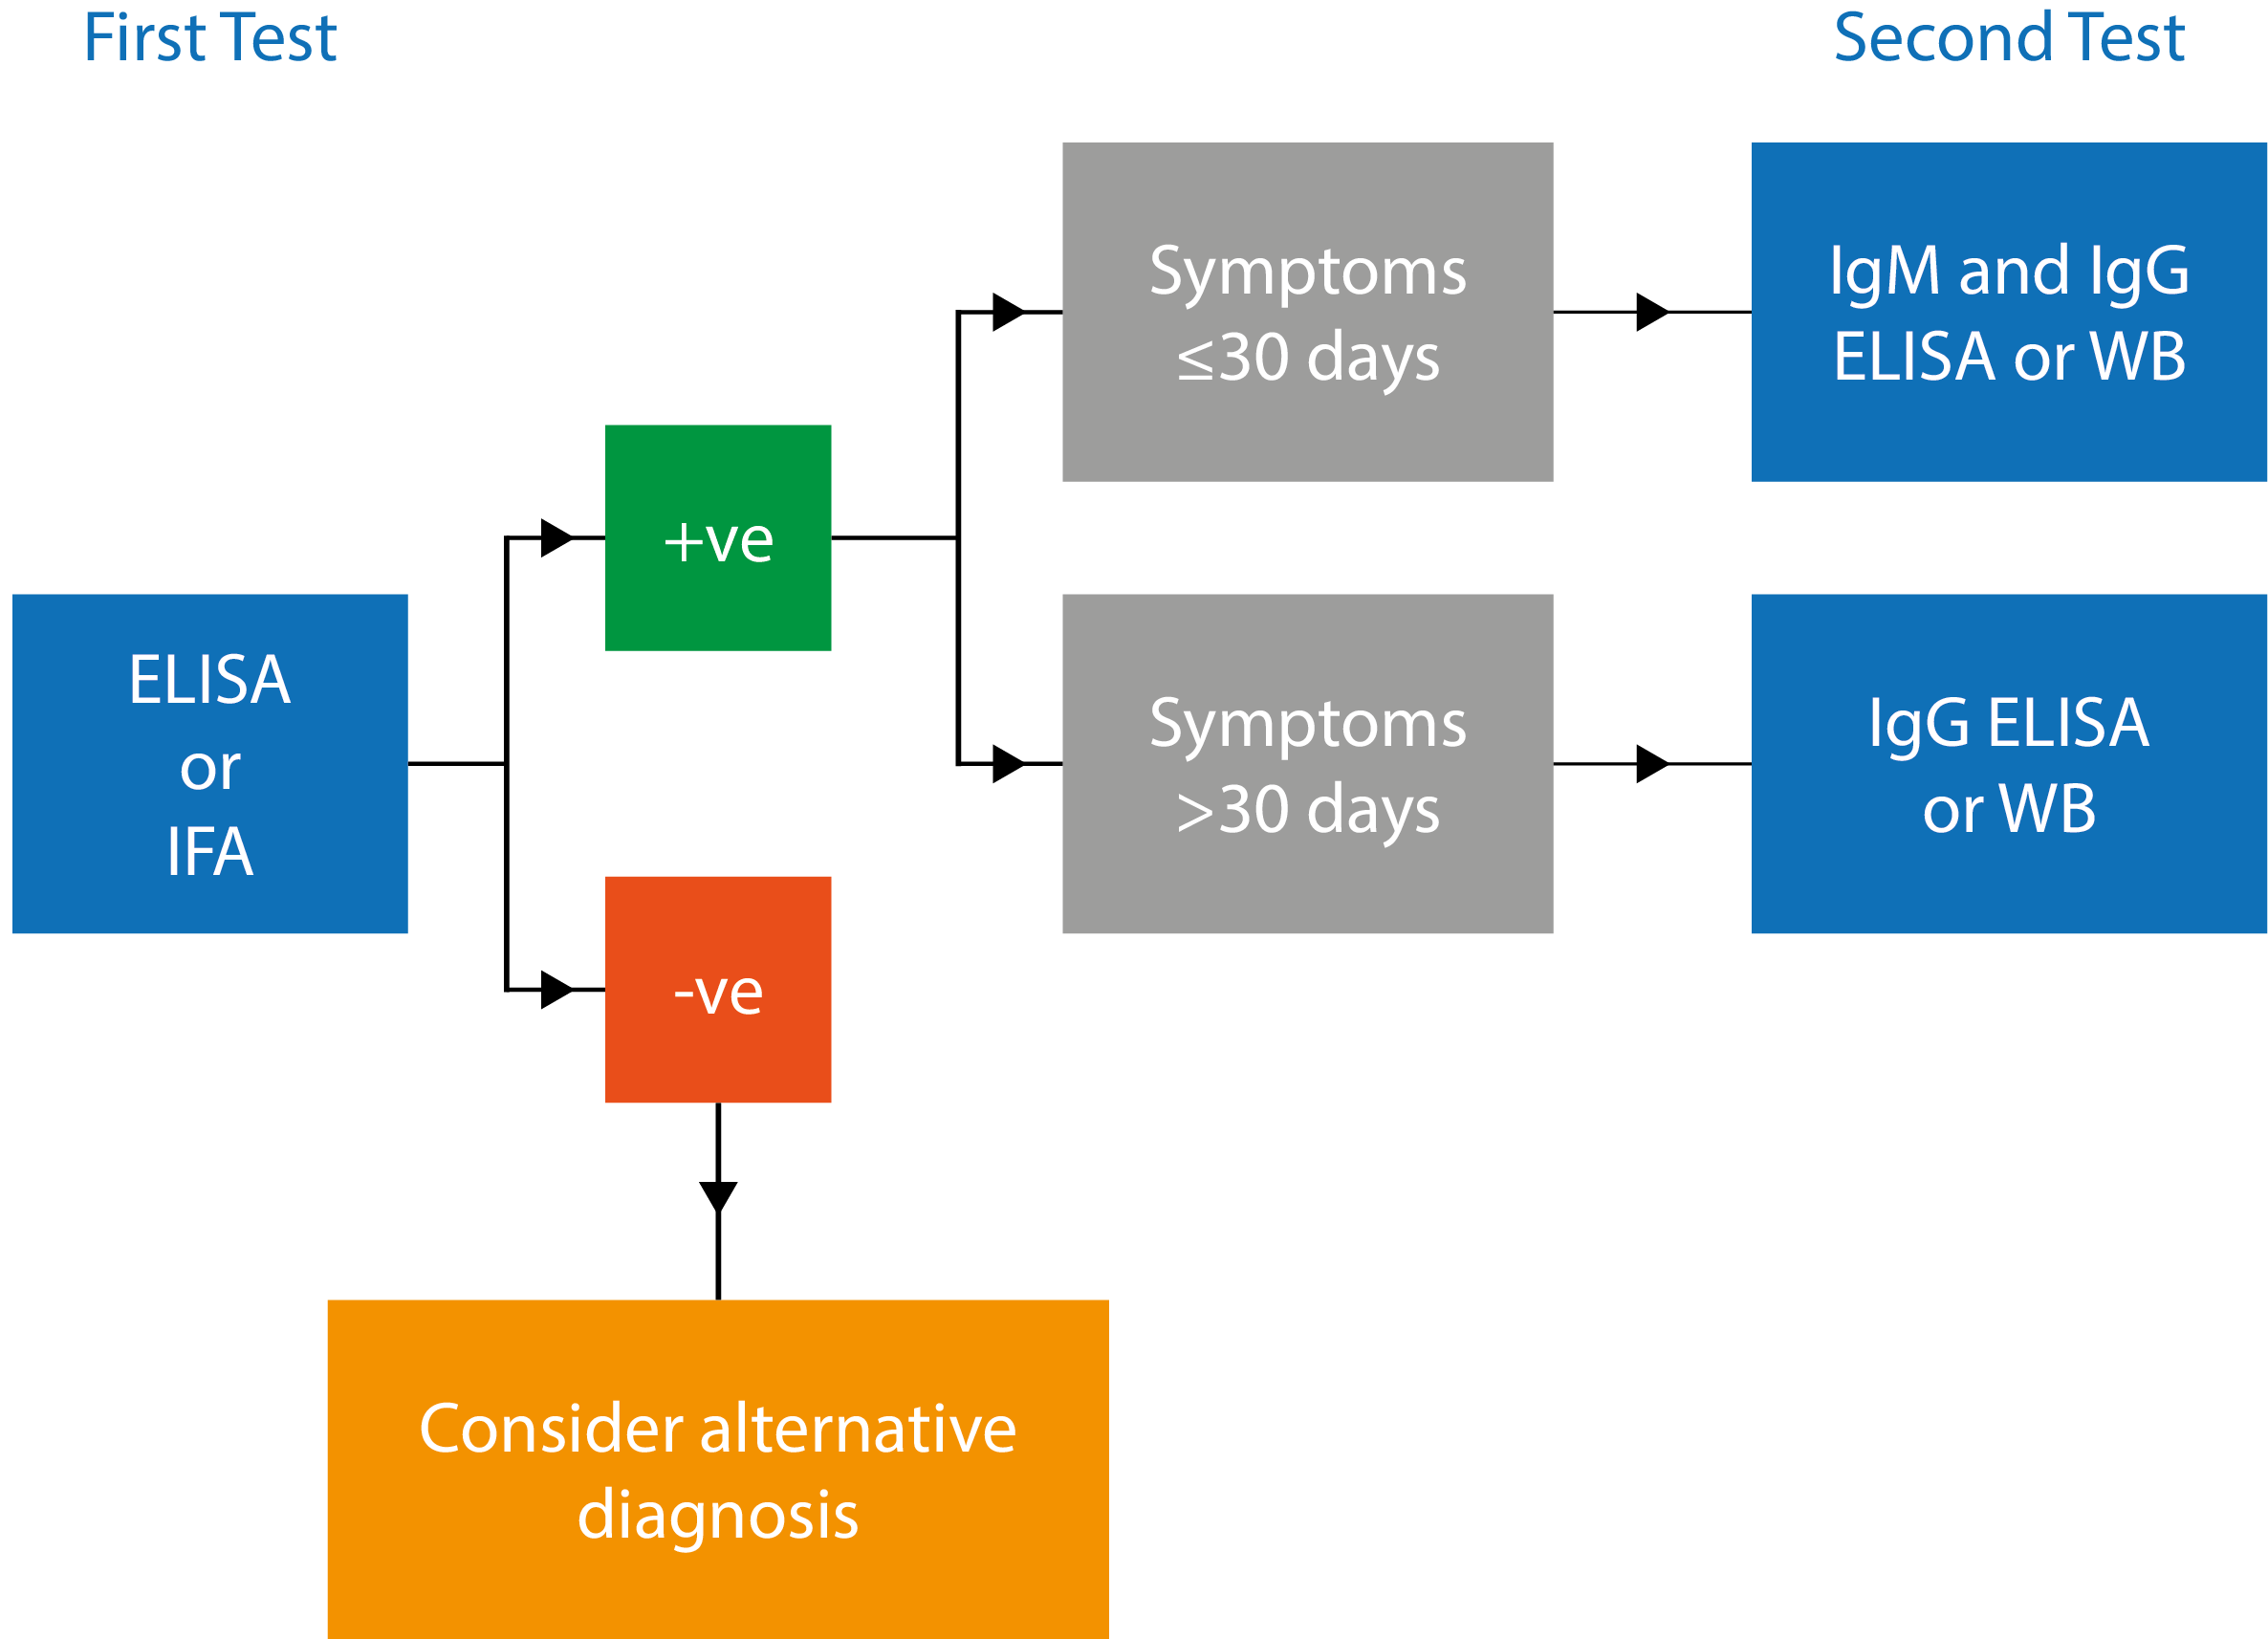 Schematic illustrating 2TT algorithm for diagnosis of Lyme disease